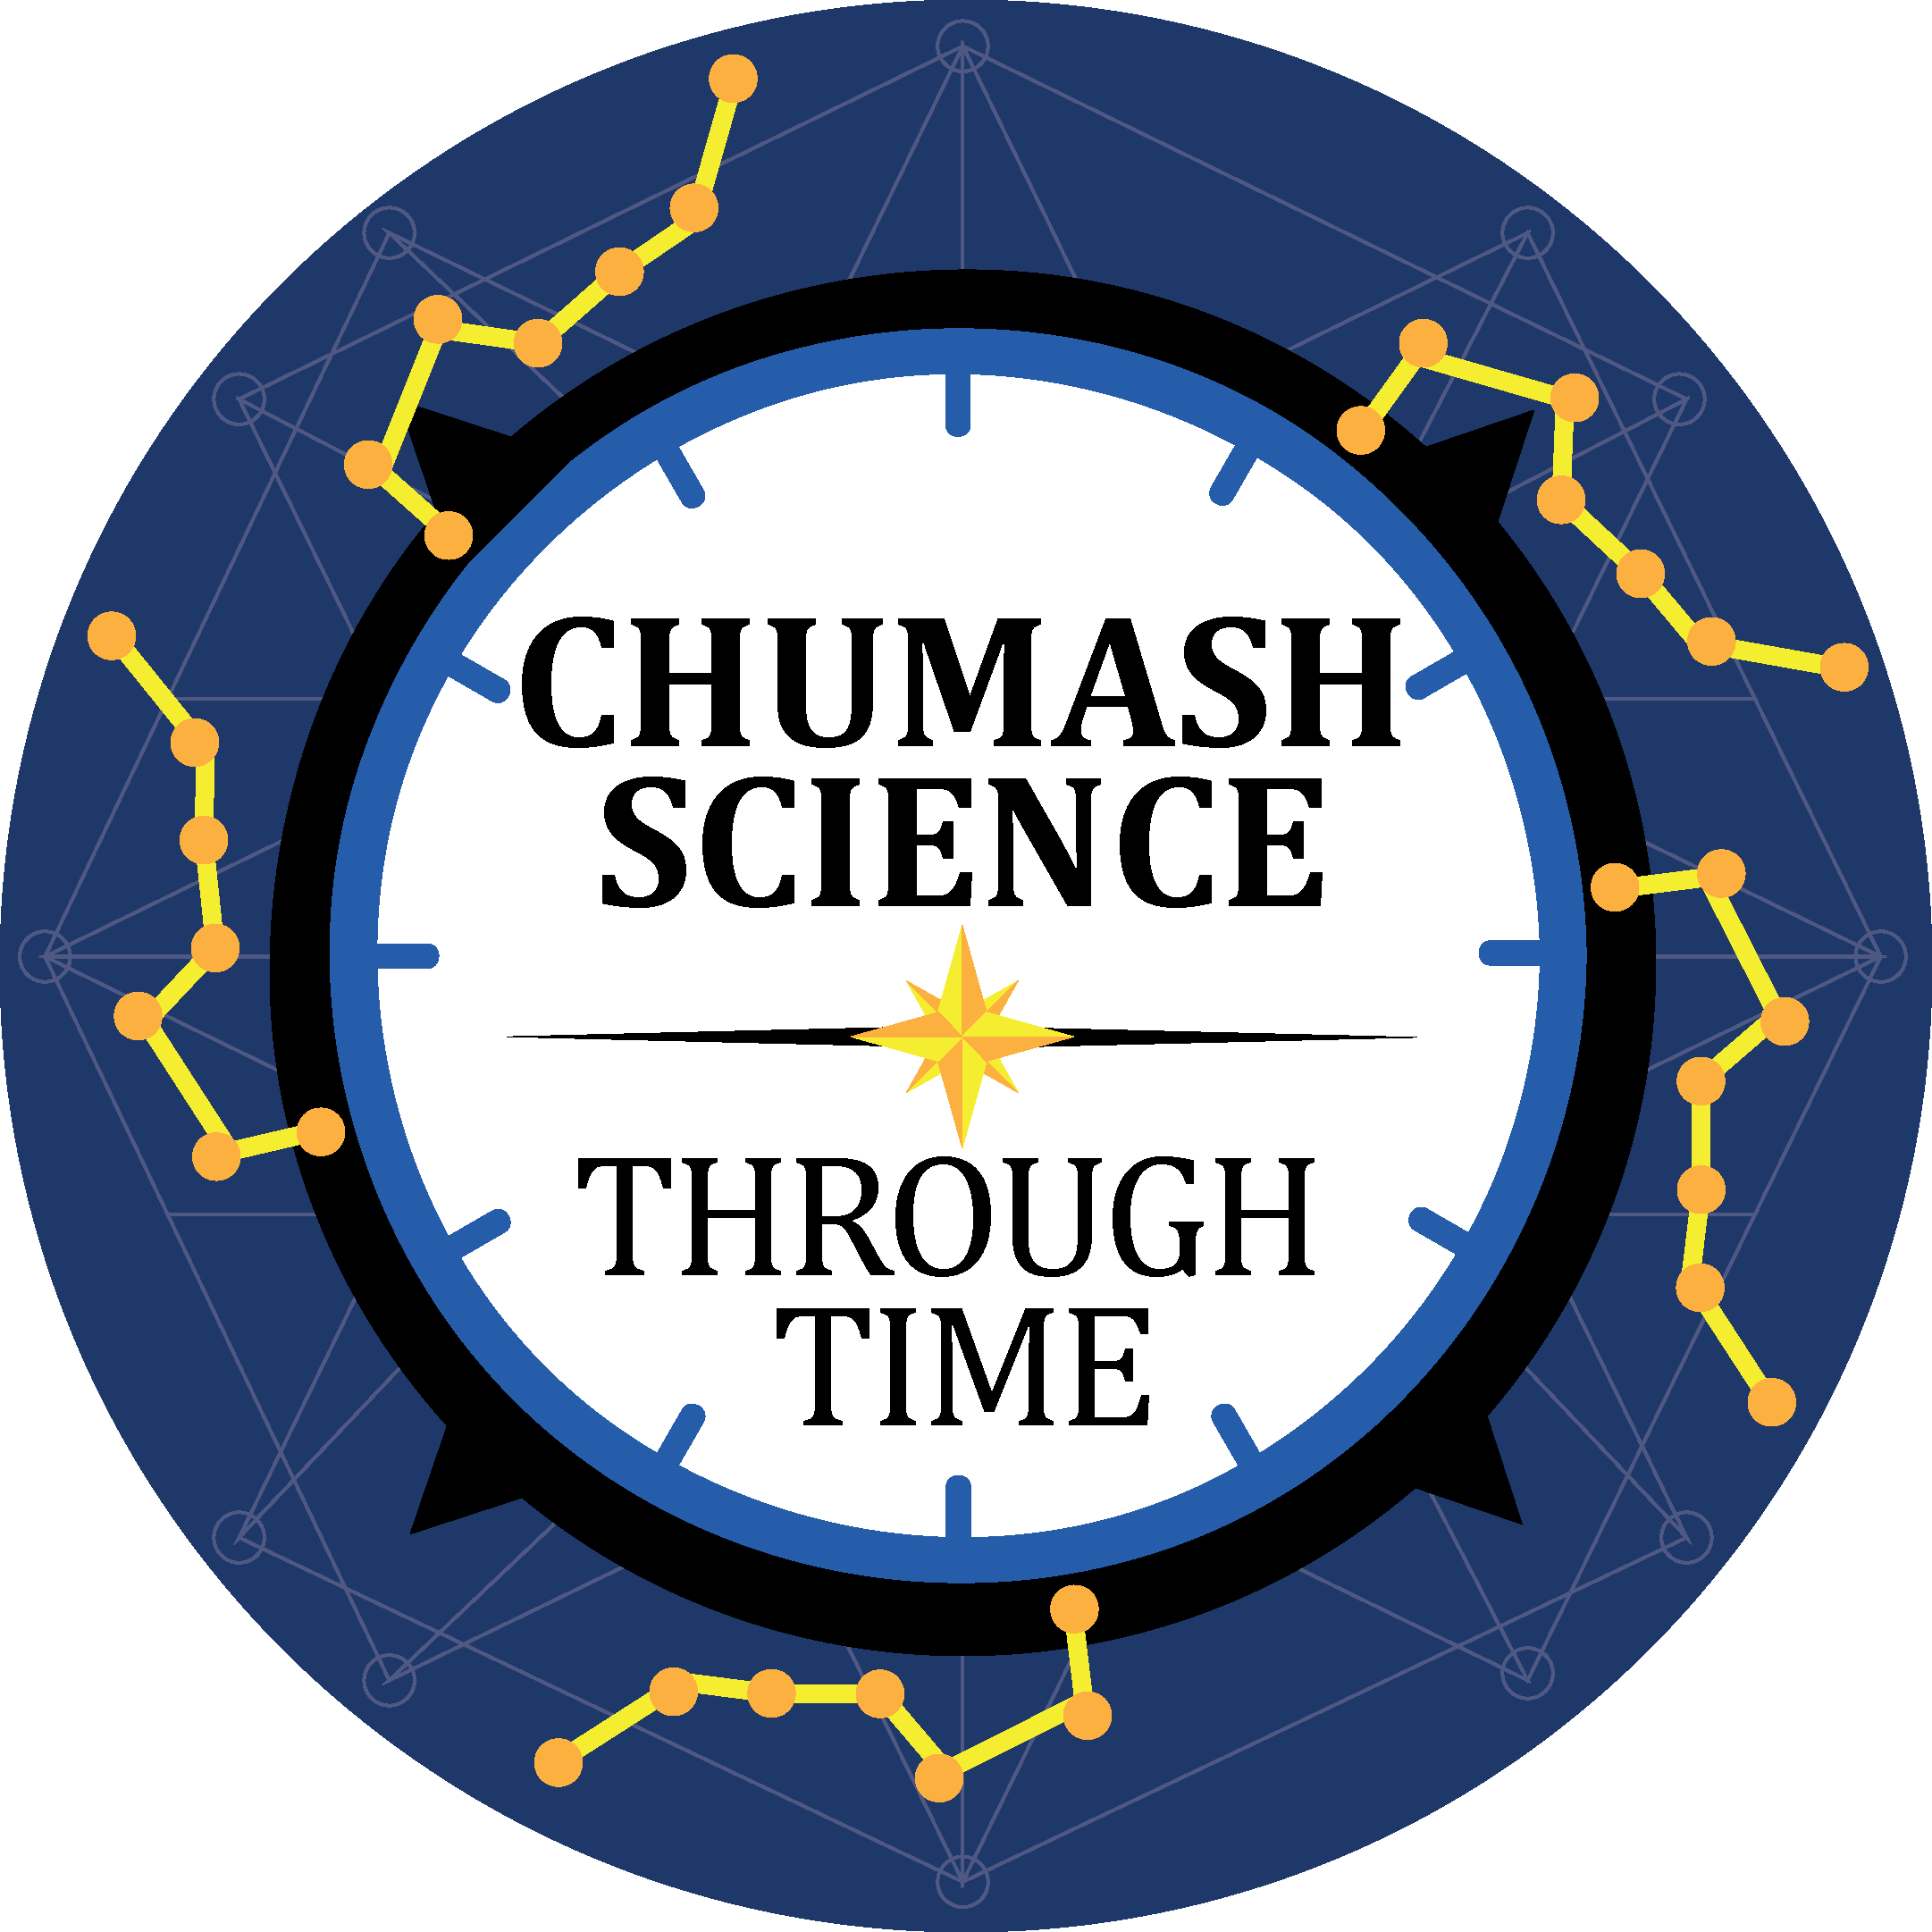 Chumash Science Through Time